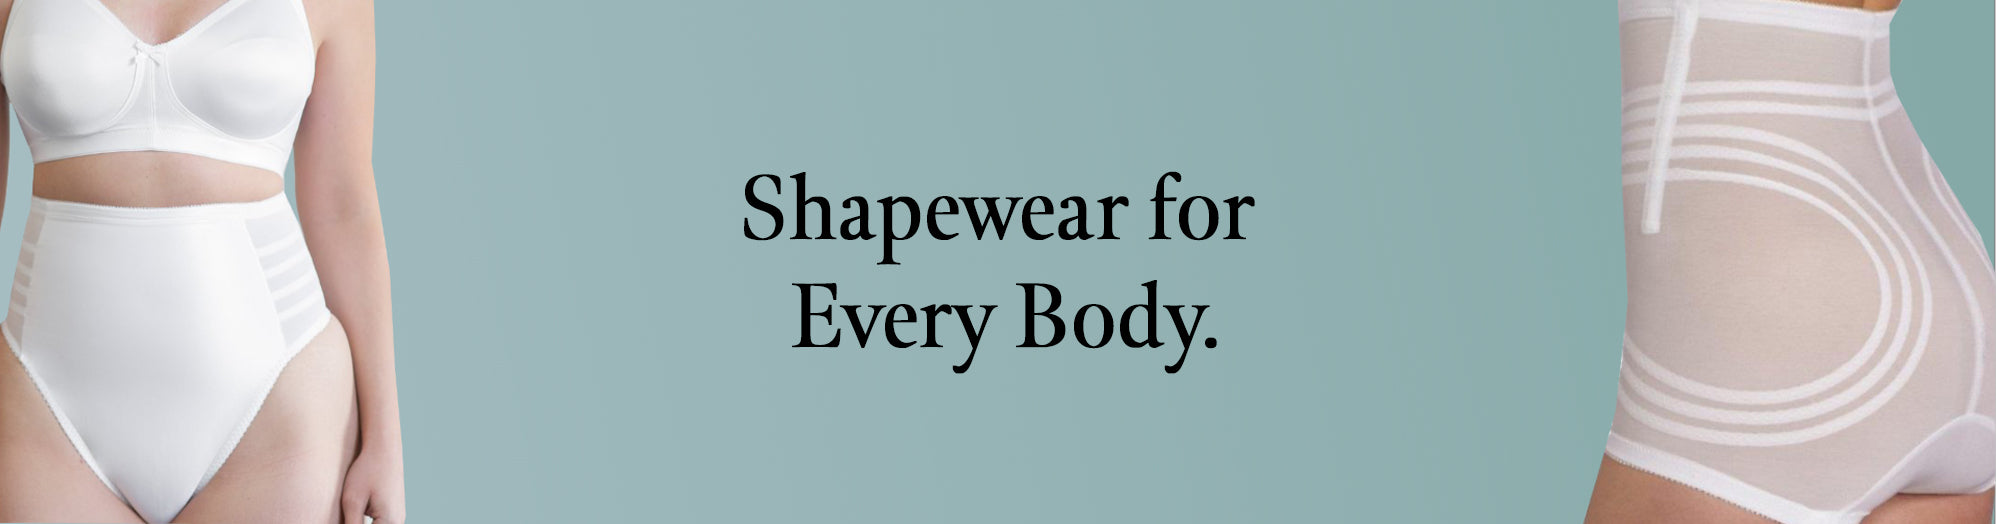 Rago Shapewear - Waist Cinchers, All-in-One Girdles, & More